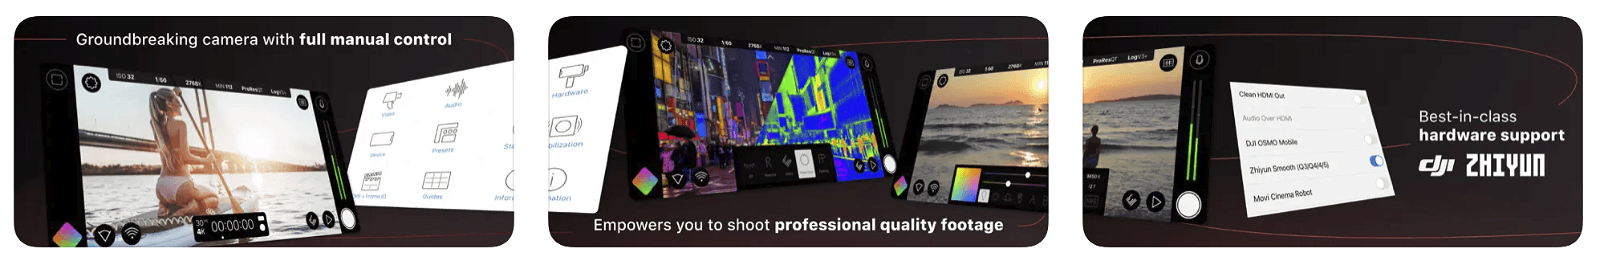 Screenshot of Filmic Pro V7 camera app website product images